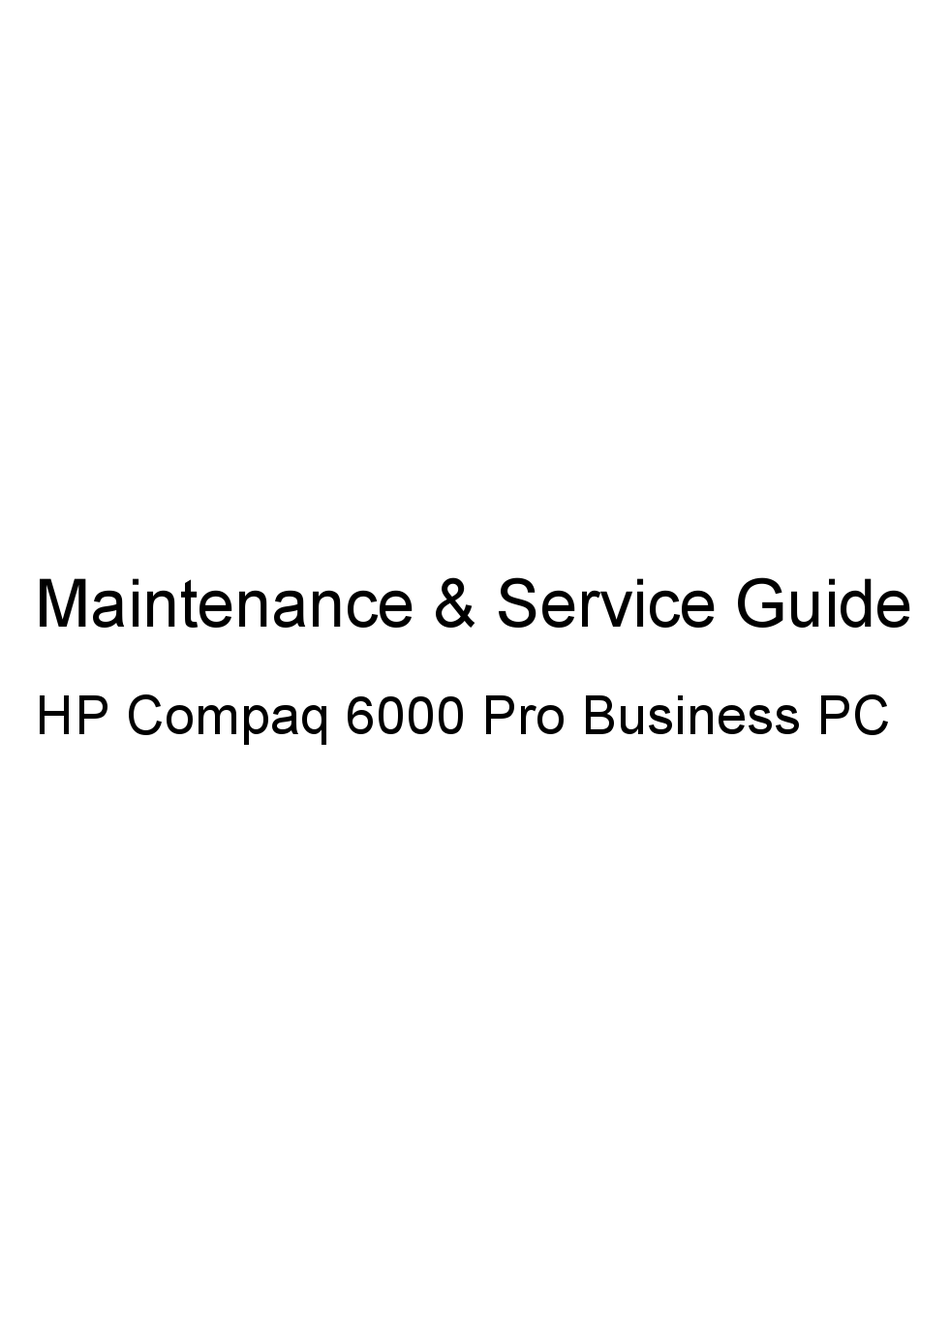 Hp Compaq 6000 Pro Mt Maintenance And Service Manual Pdf Download Manualslib